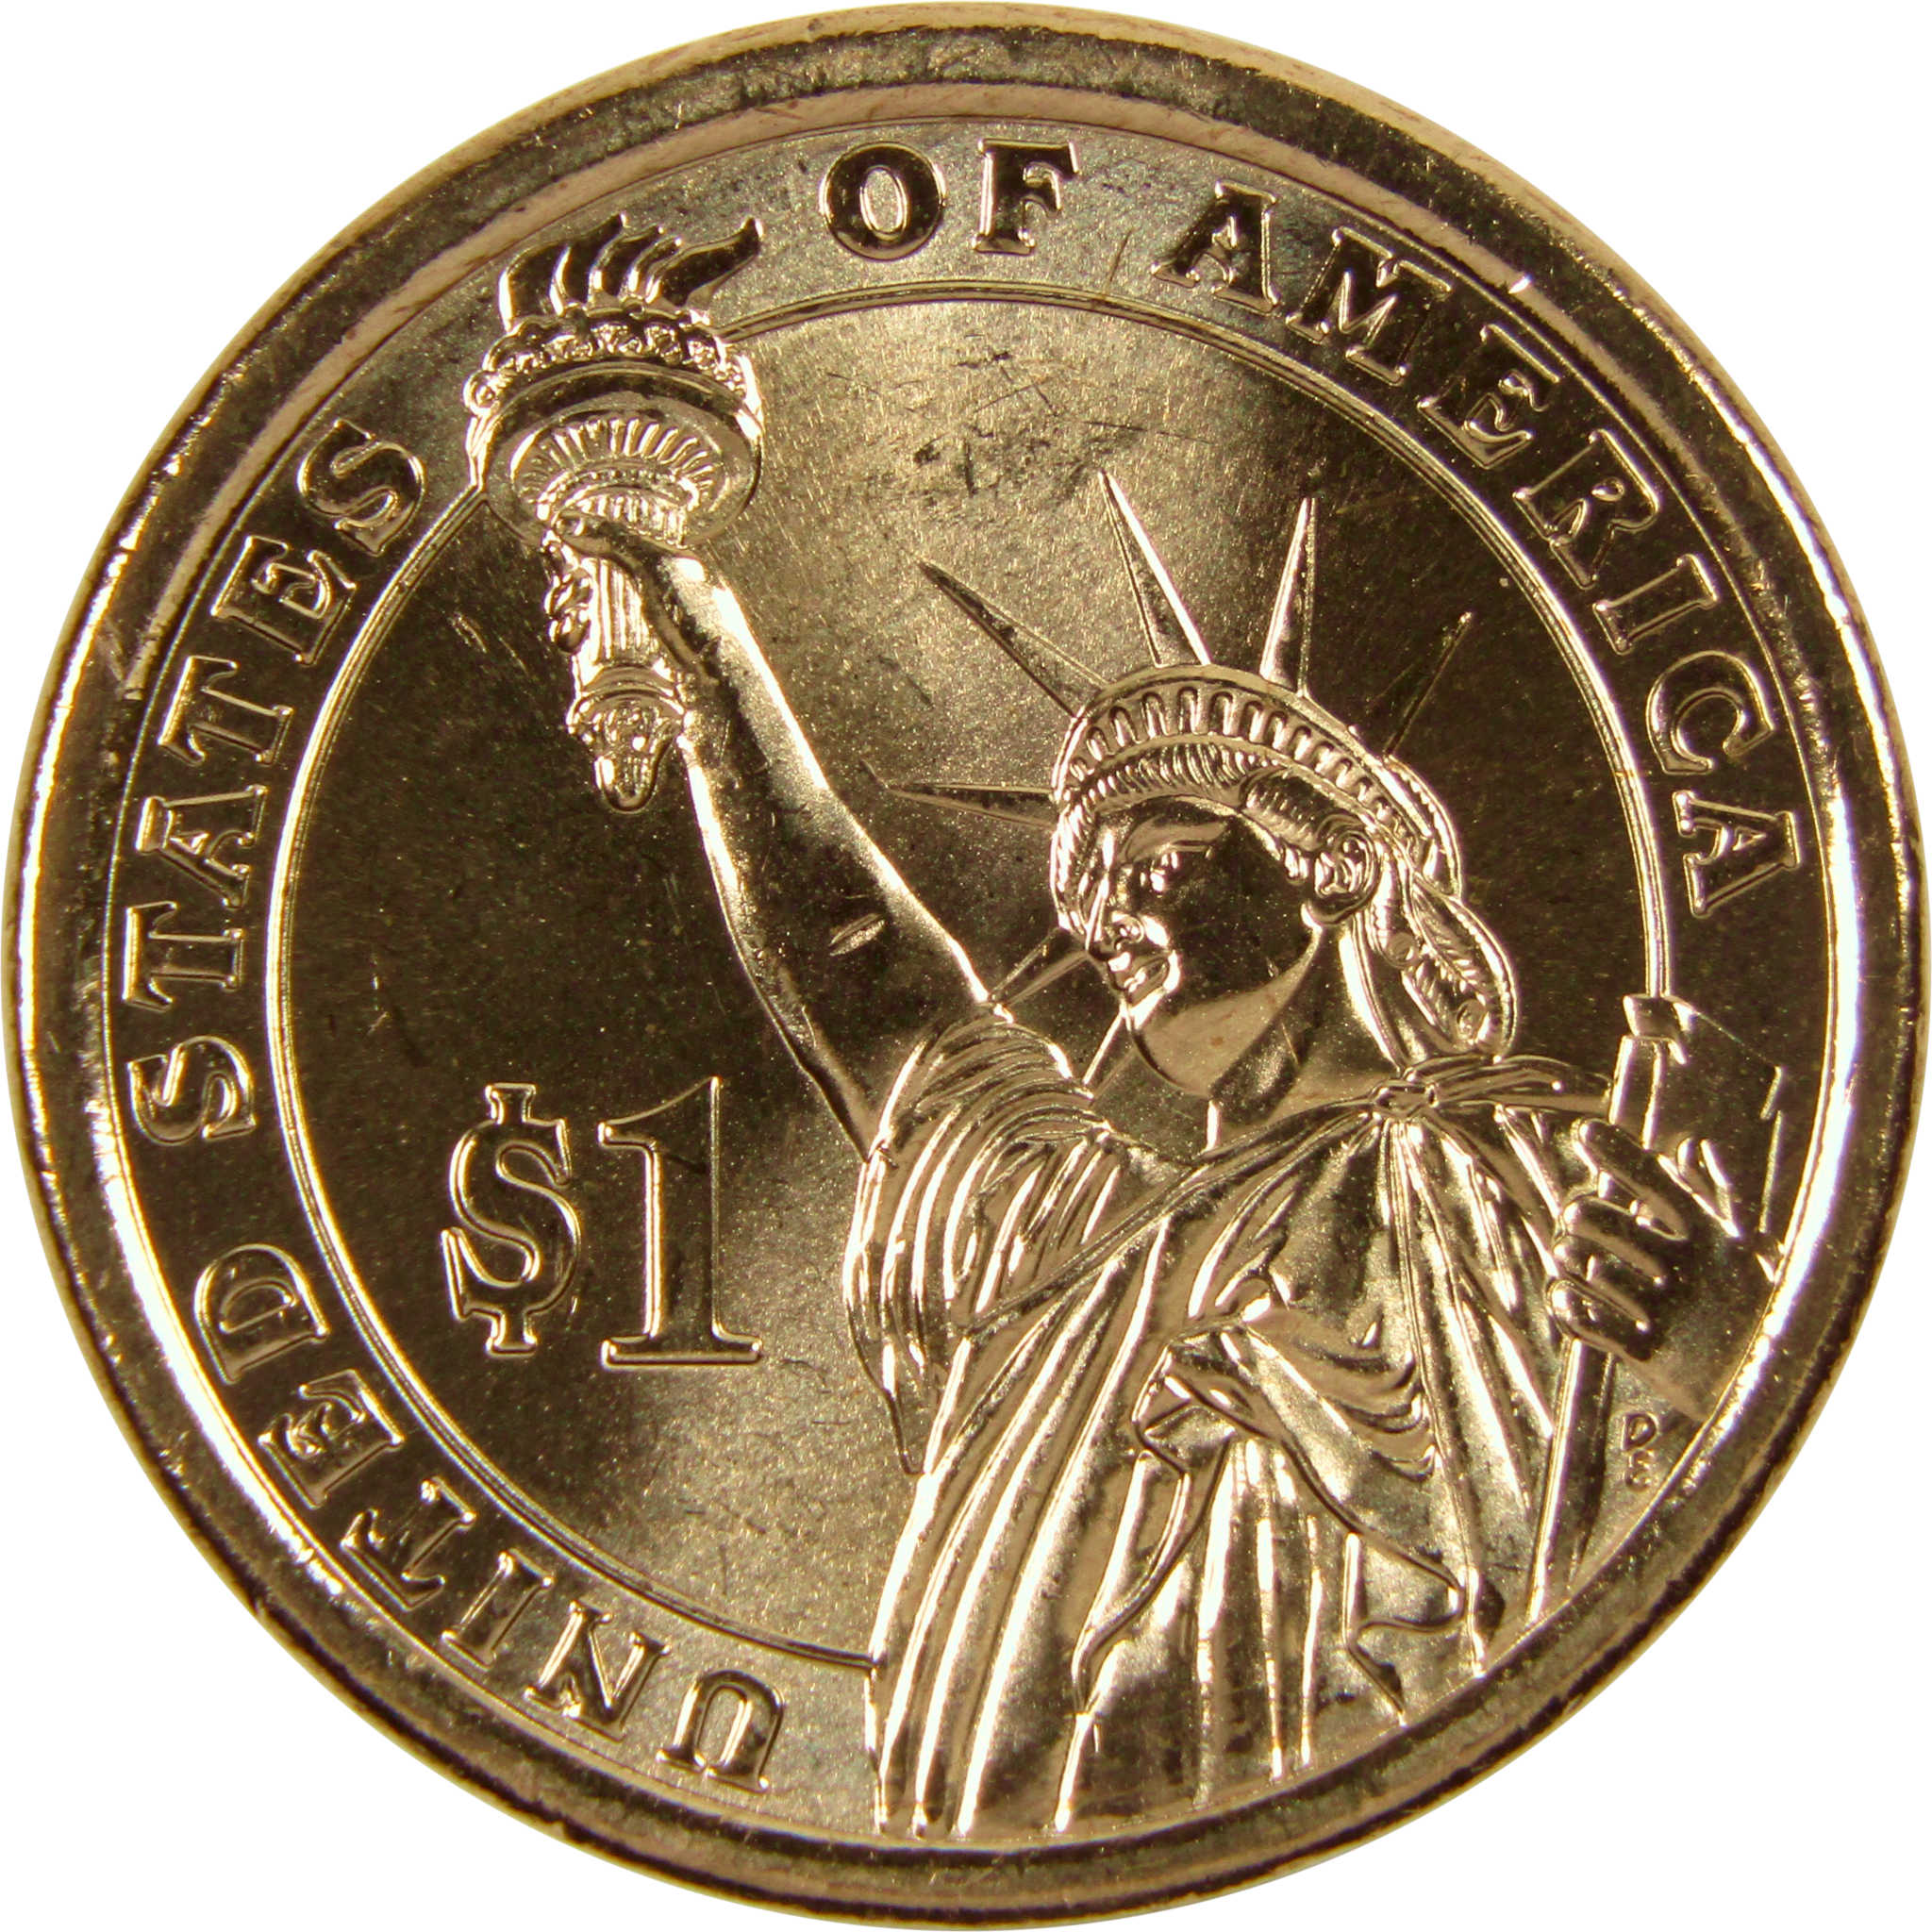 2011 D Ulysses S Grant Presidential Dollar BU Uncirculated $1 Coin